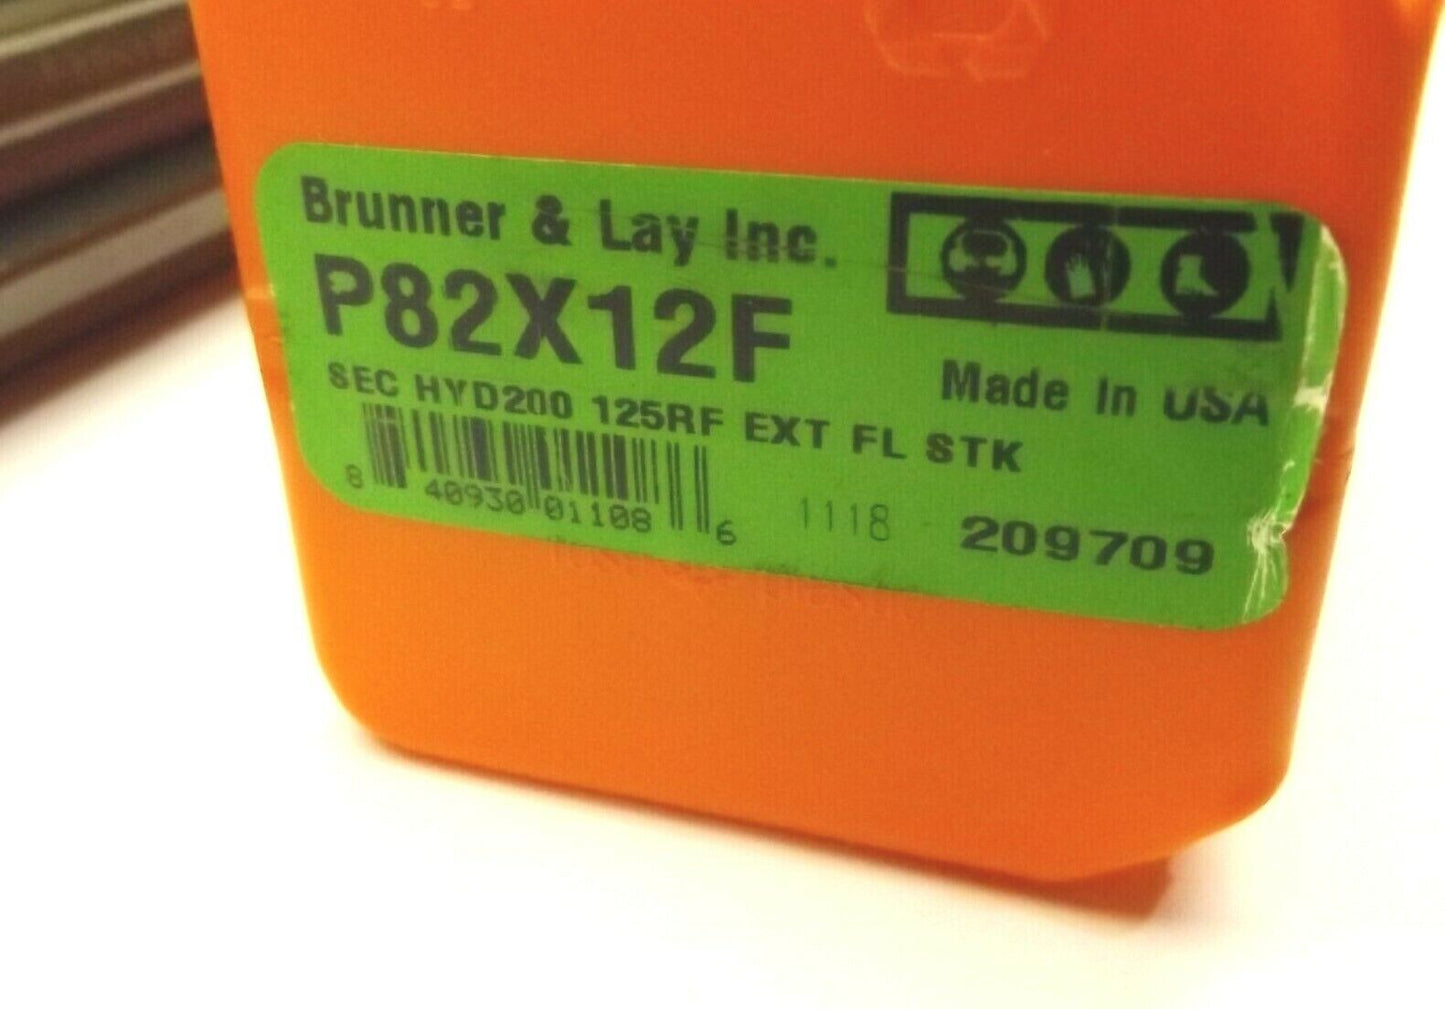 BRUNNER & LAY P82X12F SEC HYD200 125RF EXT FL STK